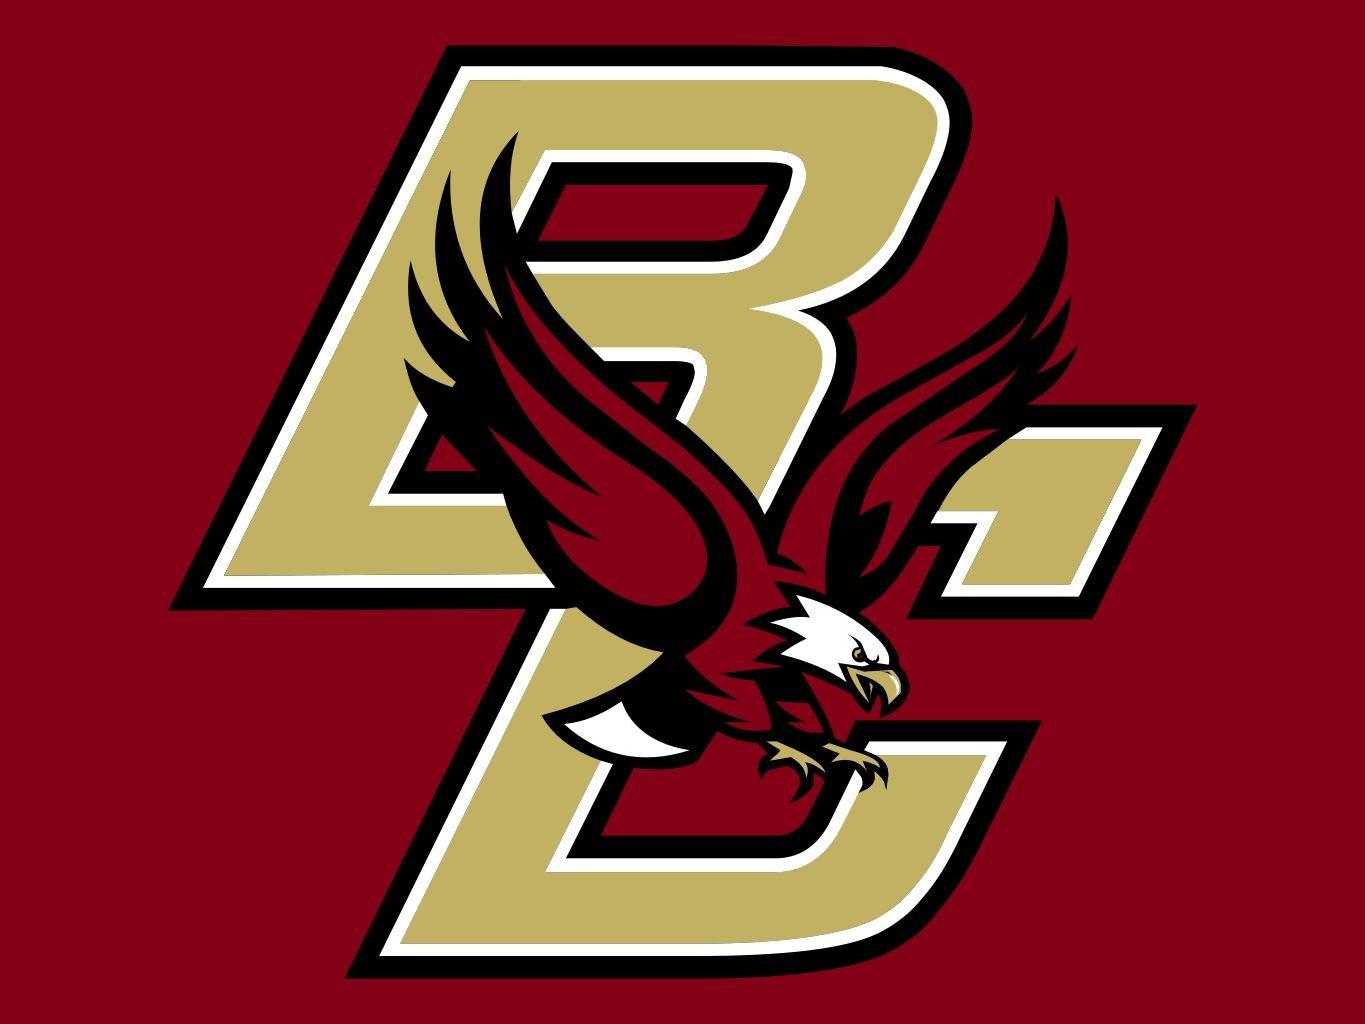 Boston College Eagles Logo - Boston College Eagles | NCAA Sports Wiki | FANDOM powered by Wikia